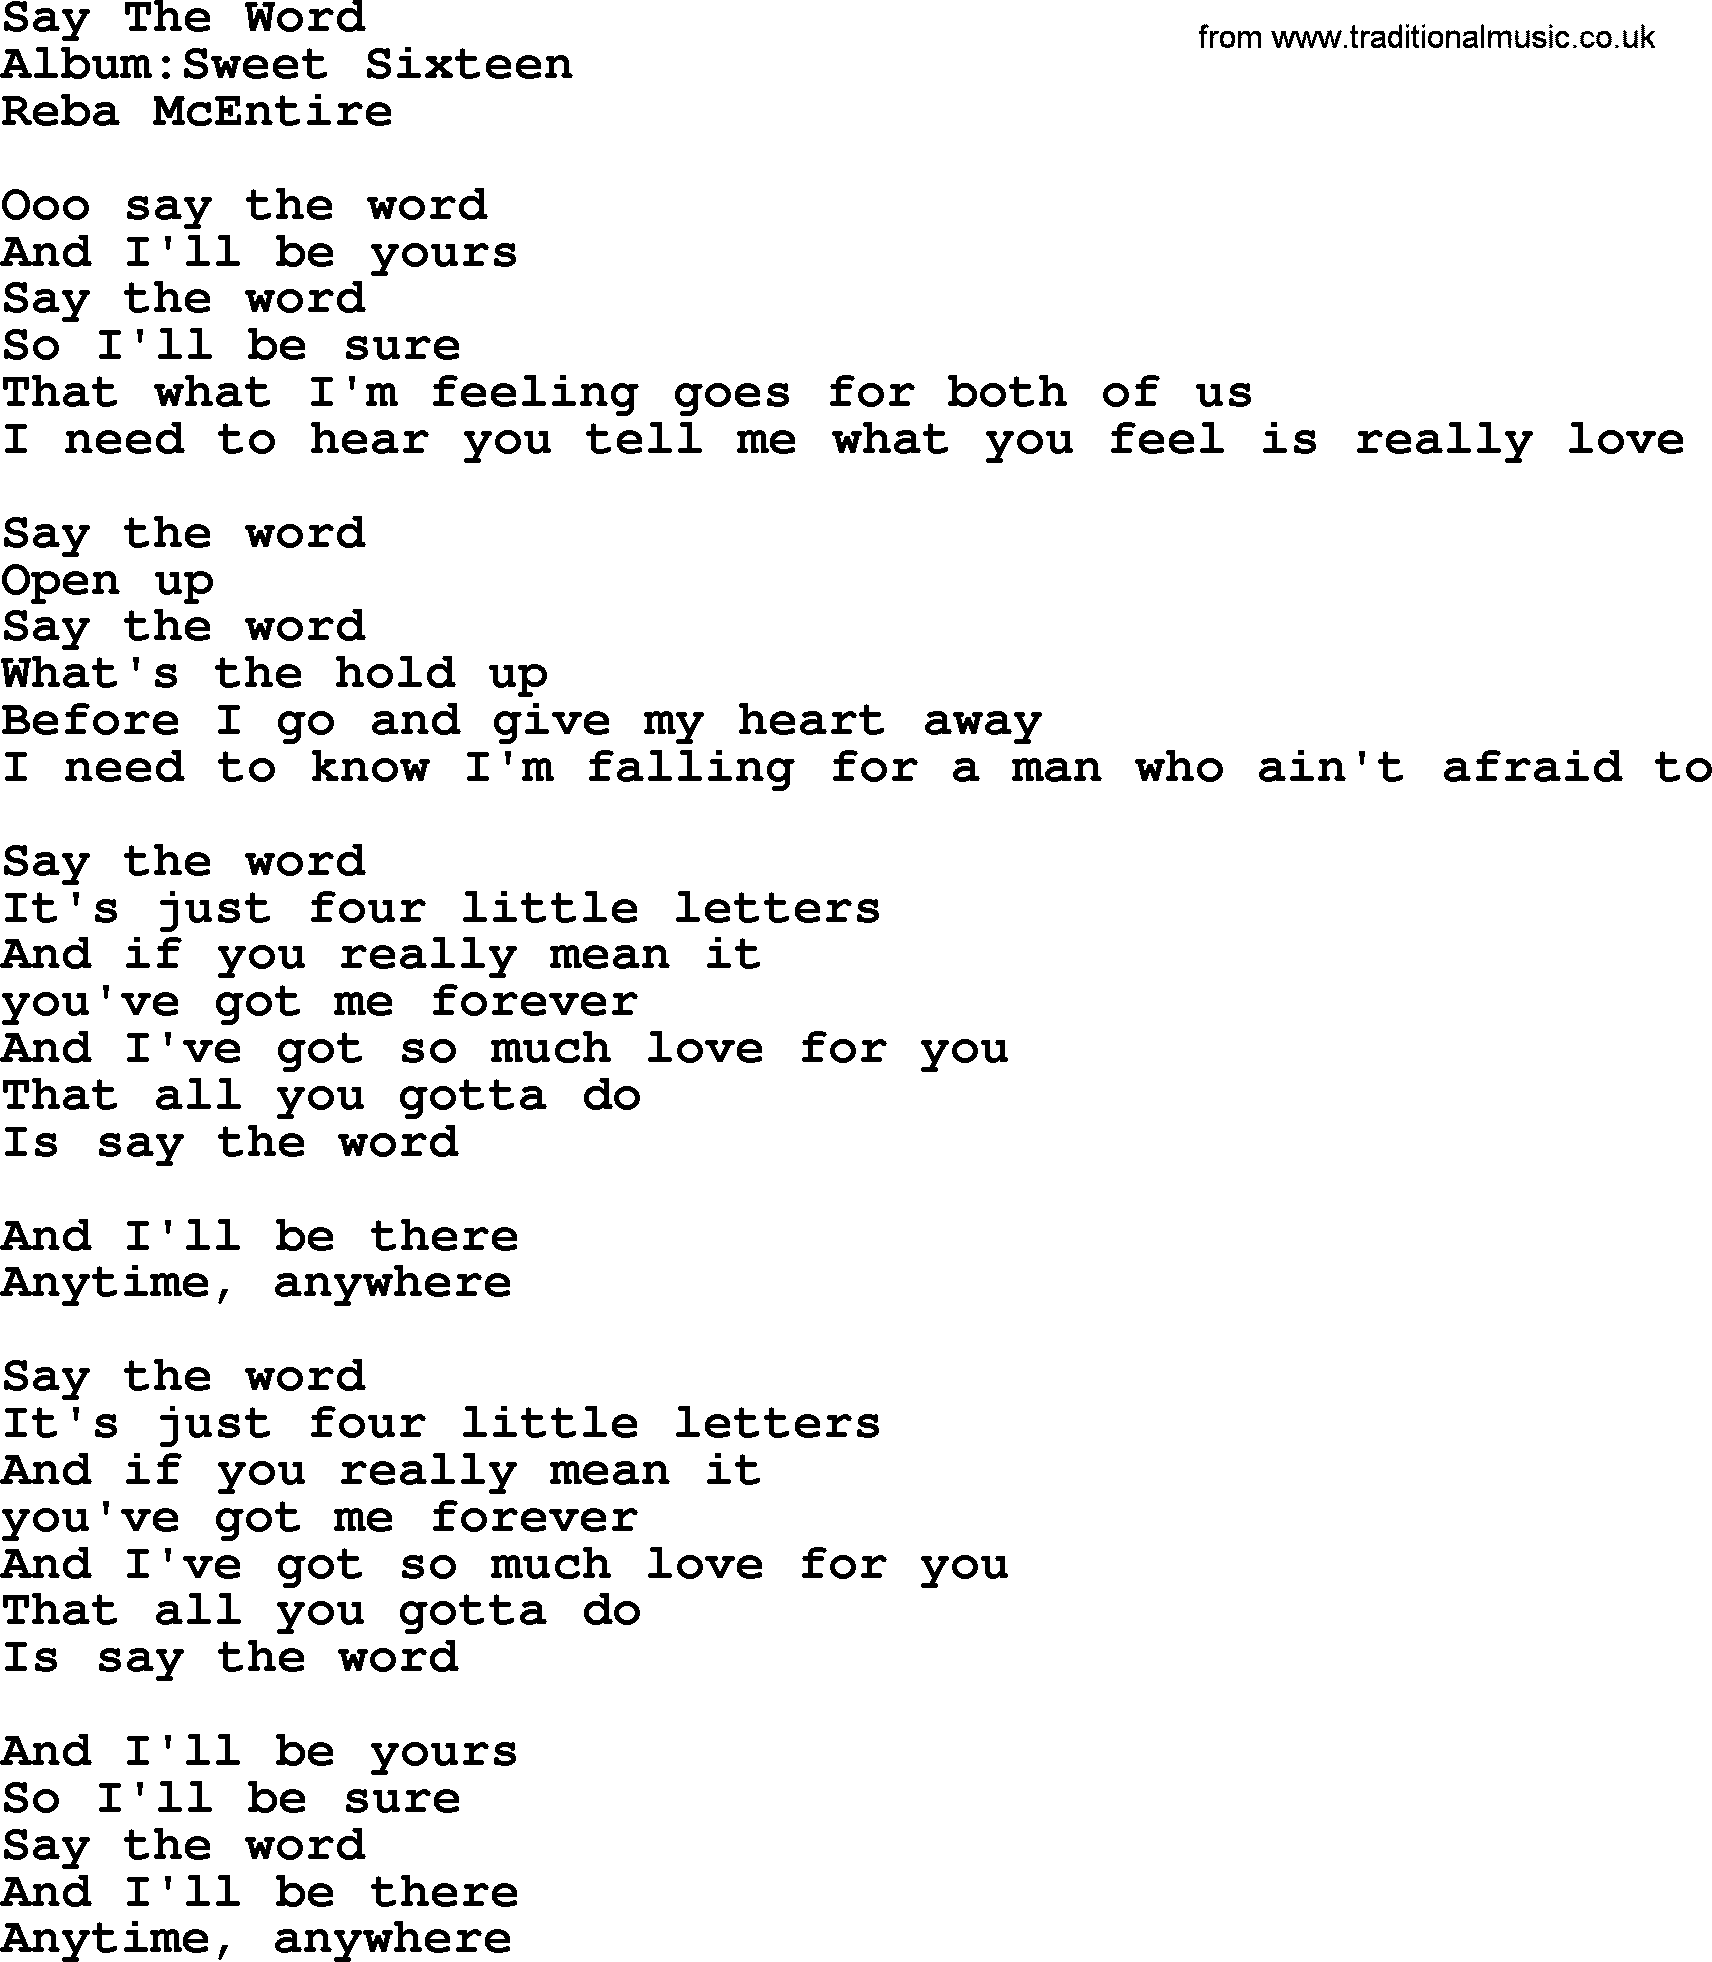 Reba McEntire song: Say The Word lyrics